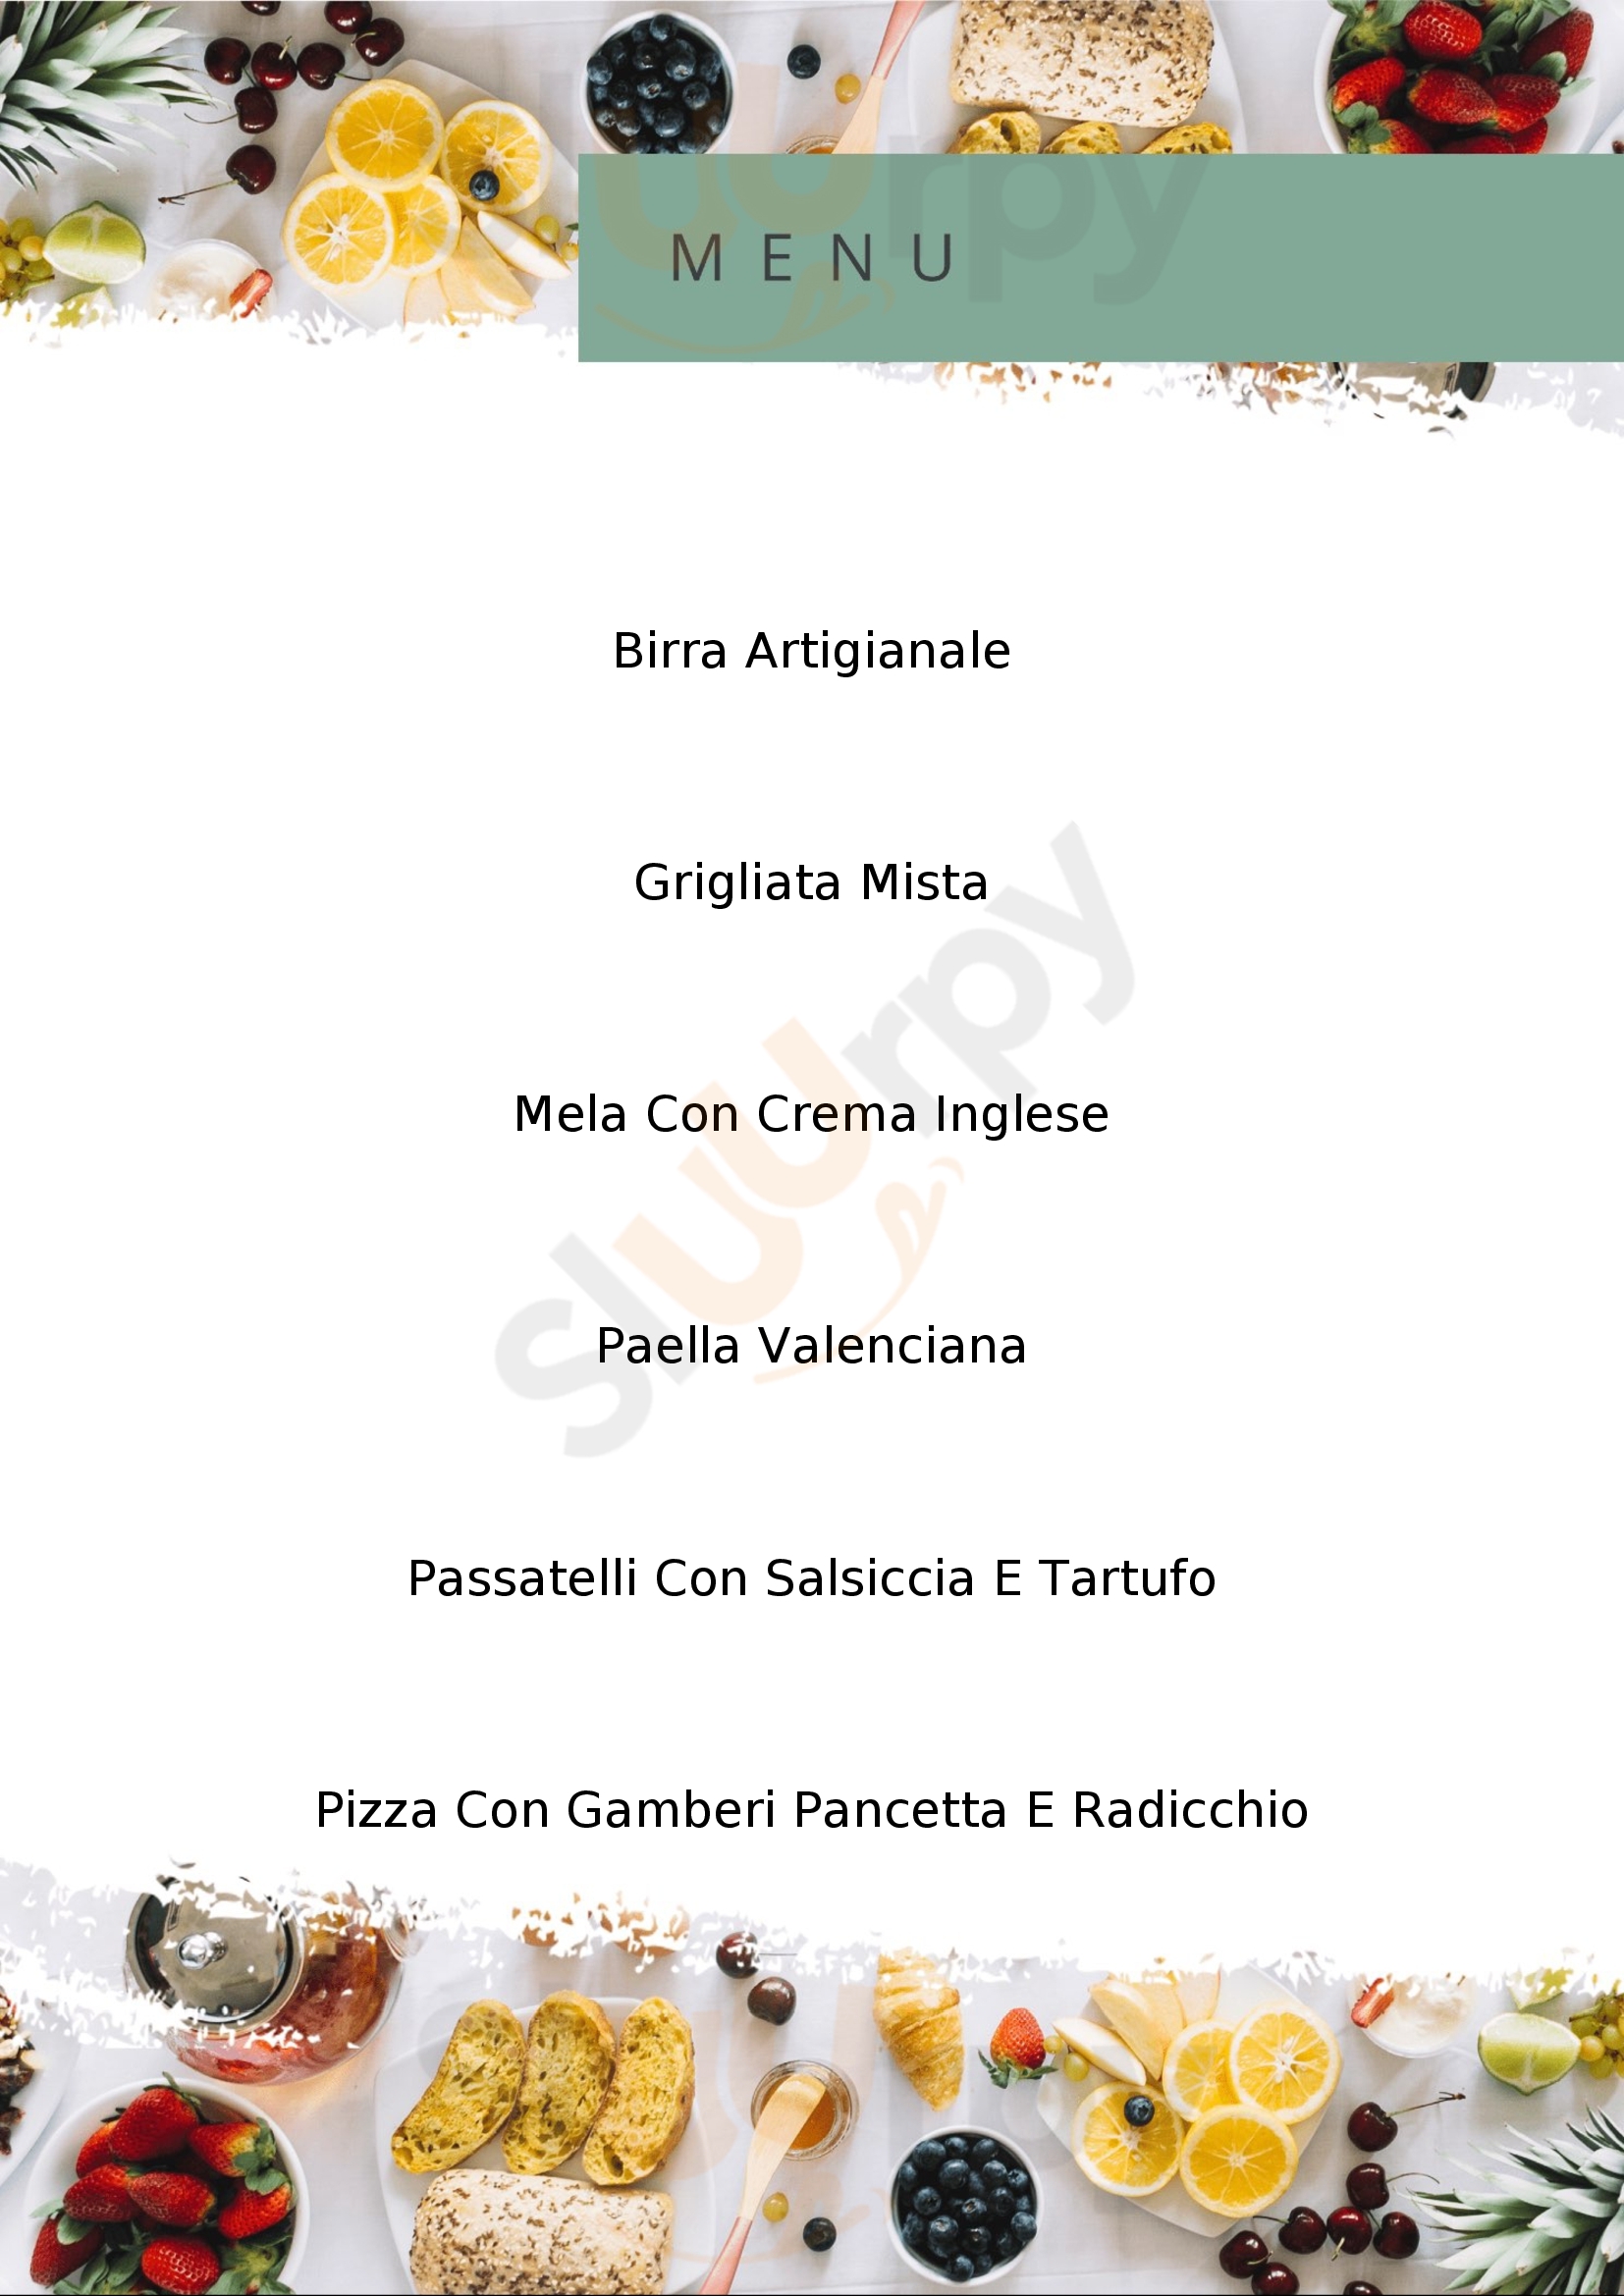 Pizzeria Ristorante Nuovo Giardino Fossombrone menù 1 pagina